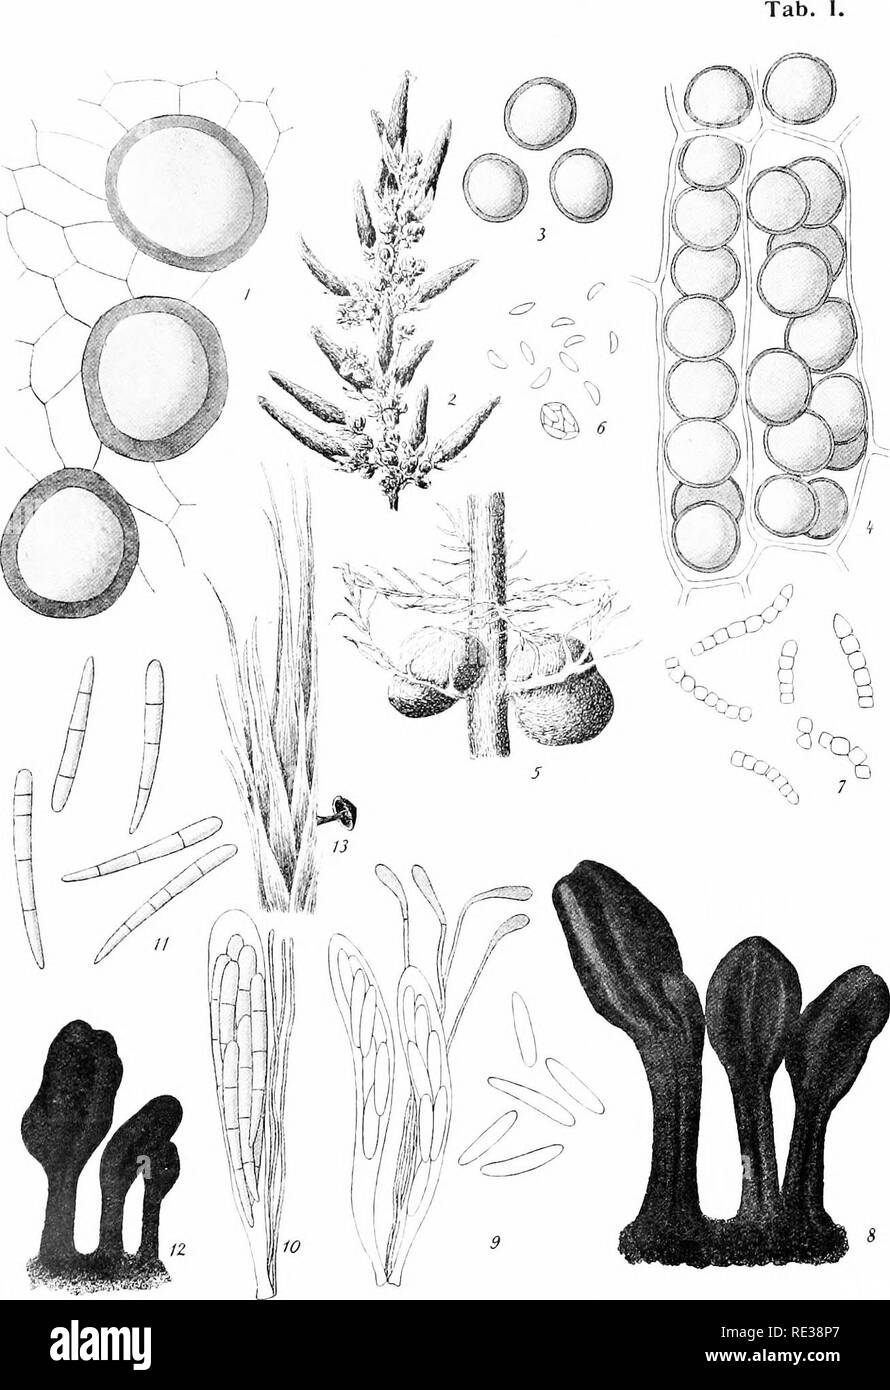 . Danish fungi as represented in the herbarium of E. Rostrup;. Fungi. Fiti. I: Physoderma deformans Rostrup, sp. —. — Fig. 2-3: Physoderma acetosellae Ro- strup, liab.^ &amp;• sp. ^-. — Pig. 4: Physoderma hippundis Rostrup, sp. -p. — Fig. 5: Phy- soderma myriophylli Rostrup,^. — Fig. b: Gymnoascus assicola Rostrup,-p. — Fig. 7; Geotrichum candidum Fries—. — Fig. 8—'-^: Corynetes arenarius Rostrup, hab.^, asc. 6. sp. ^. — Fig. 10-12; Leptoglossum Httorale Rostrup asc. 6- sp. -p, hab.-j-. — Fig. 13: Cudoniella minima sp. nov., hab.-j-. q i^Qshup del.. Please note that these images are extracted  Stock Photo